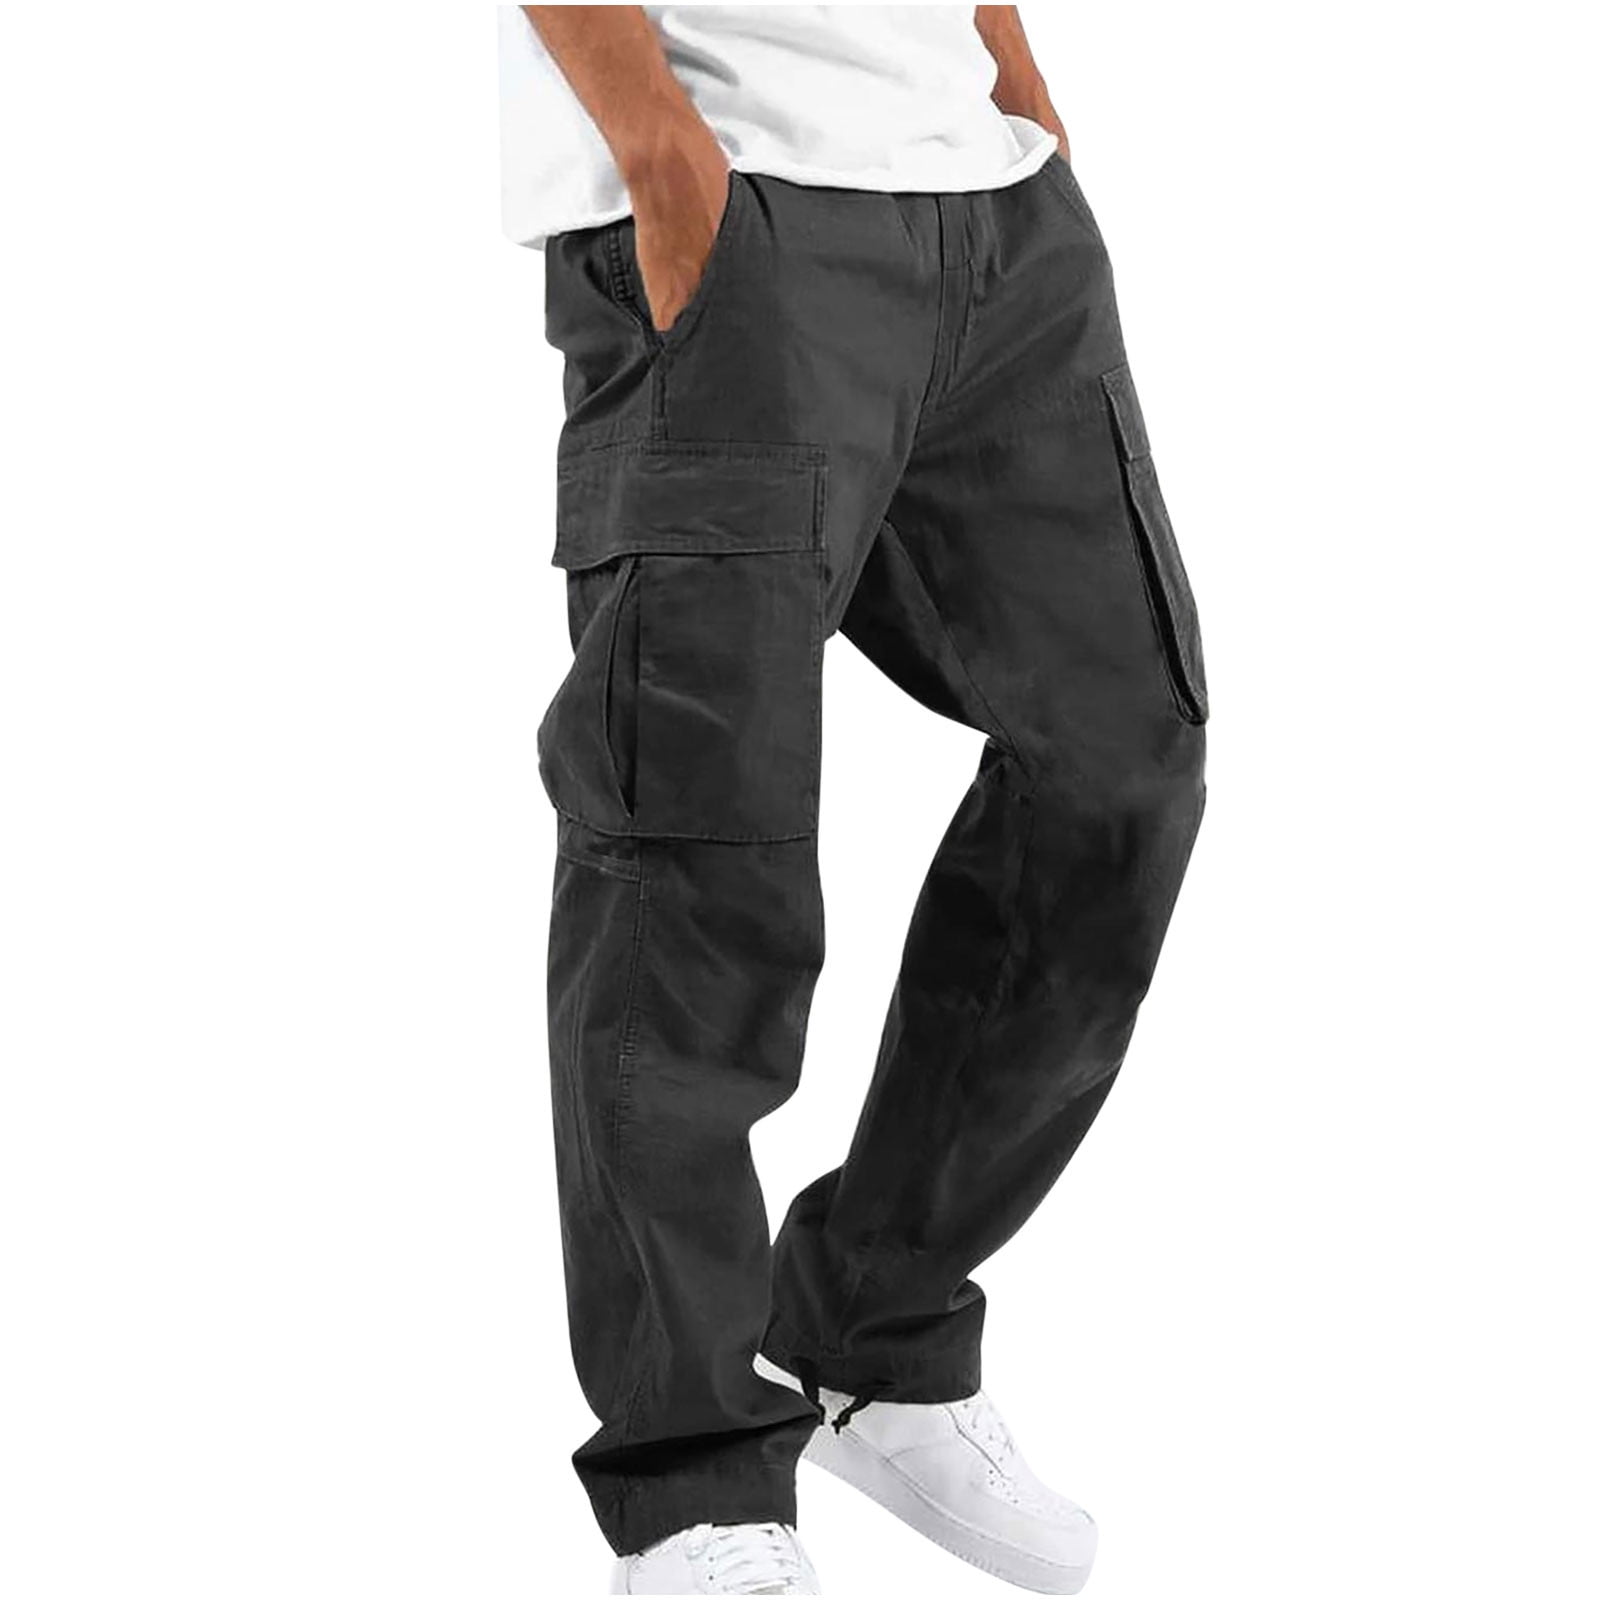 Full Urban Sweatpants Pants Fit Casual Color Classic Pants Slim Elasticity Menswear Pants Outdoor Men\'s Khaki Solid